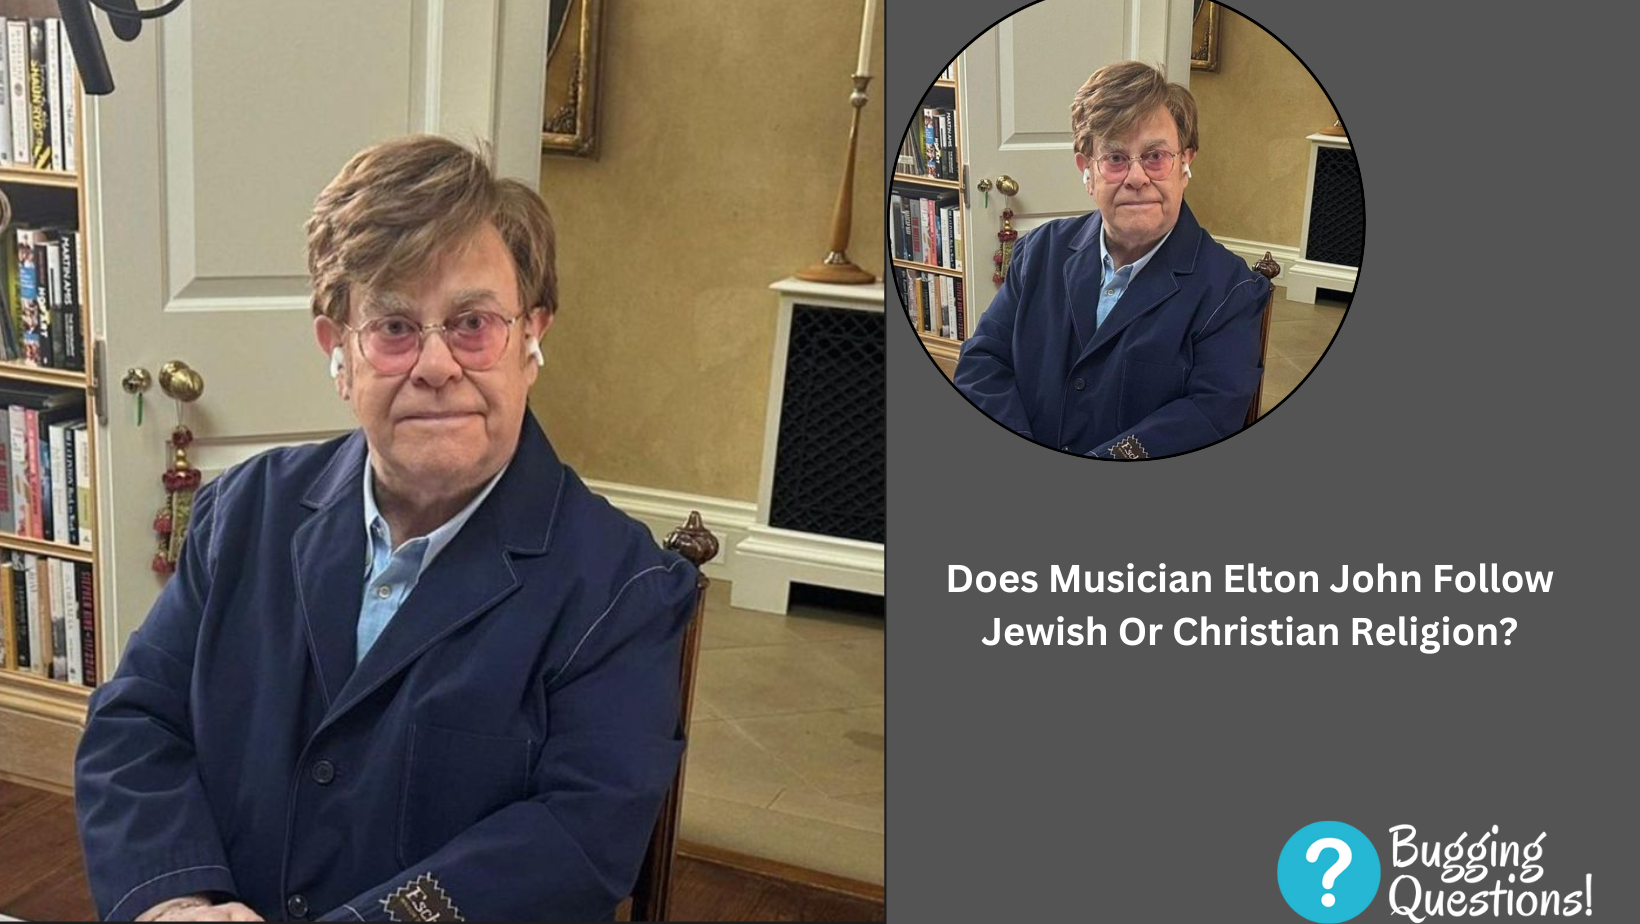 Does Musician Elton John Follow Jewish Or Christian Religion?